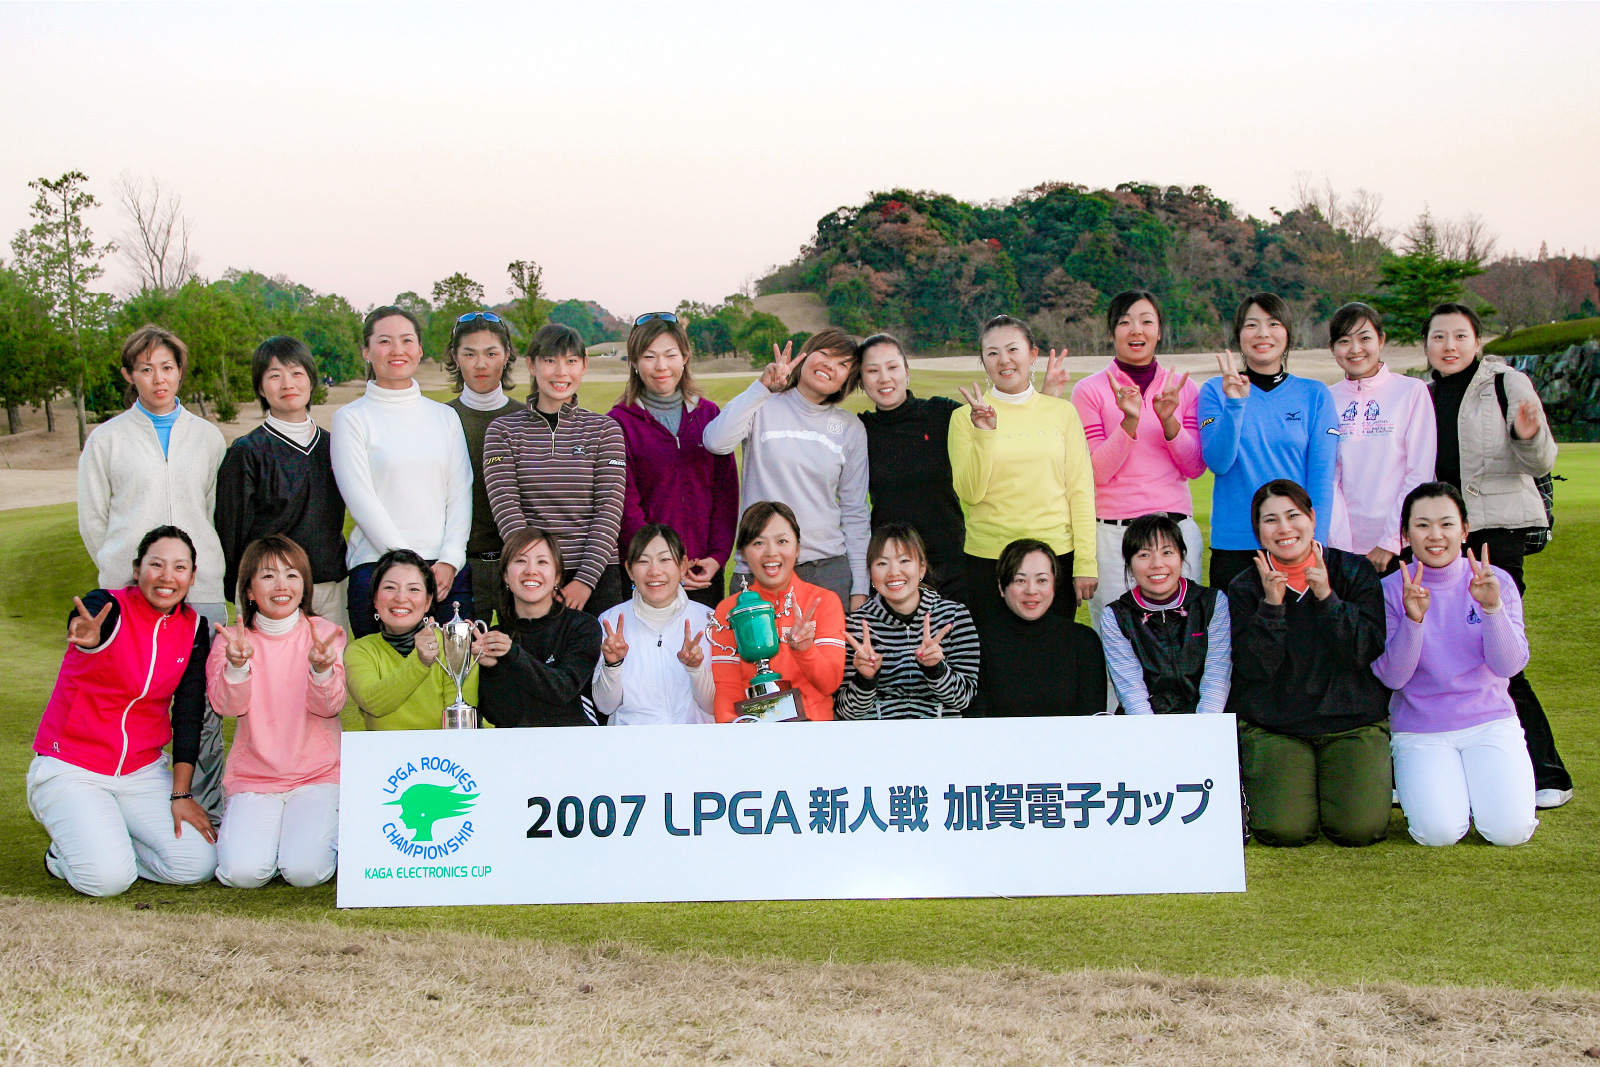 2007 LPGA 新人戦加賀電子カップ